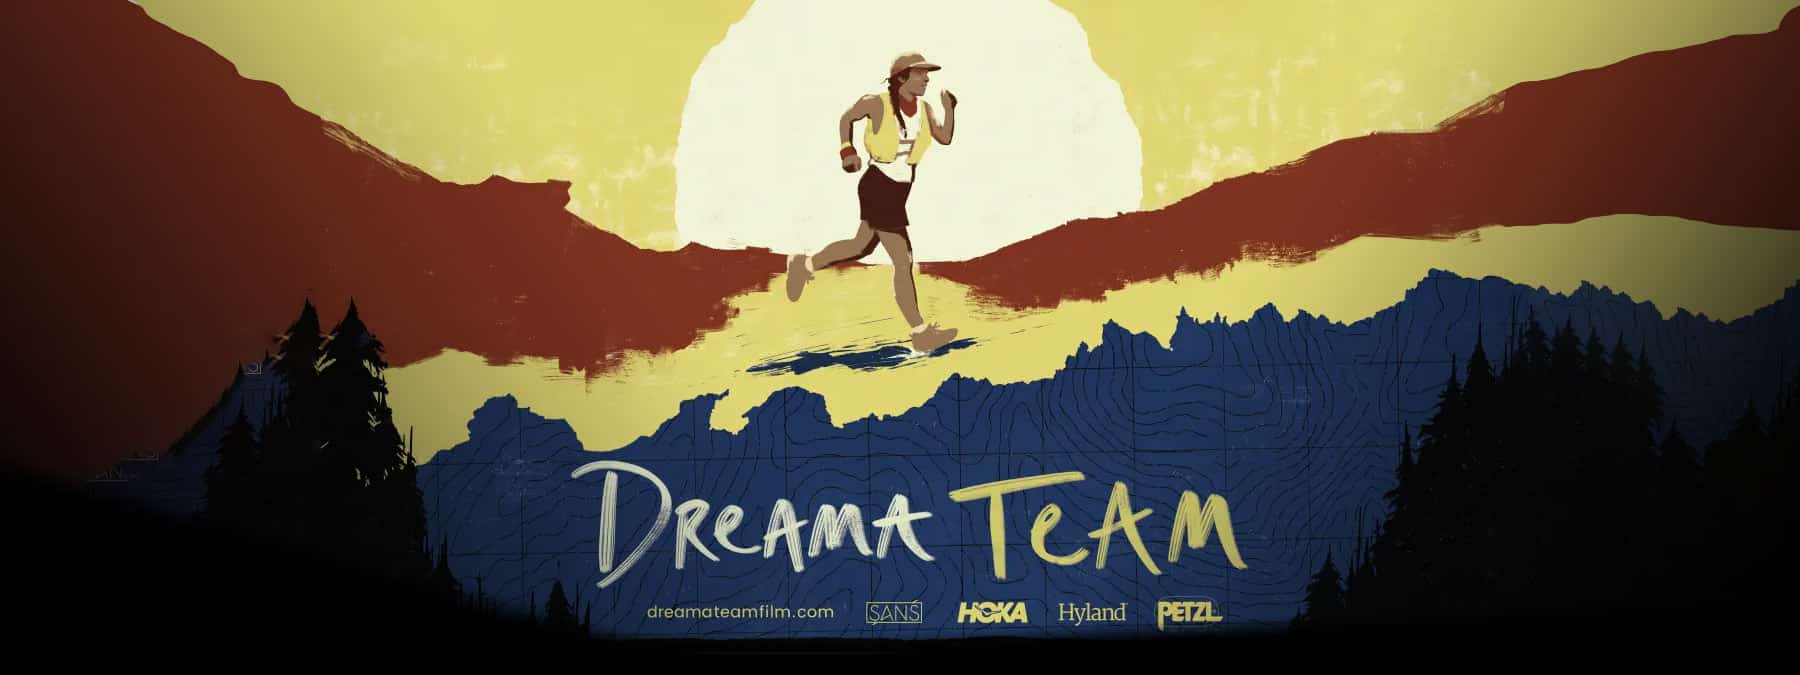 Dreama Team movie poster top